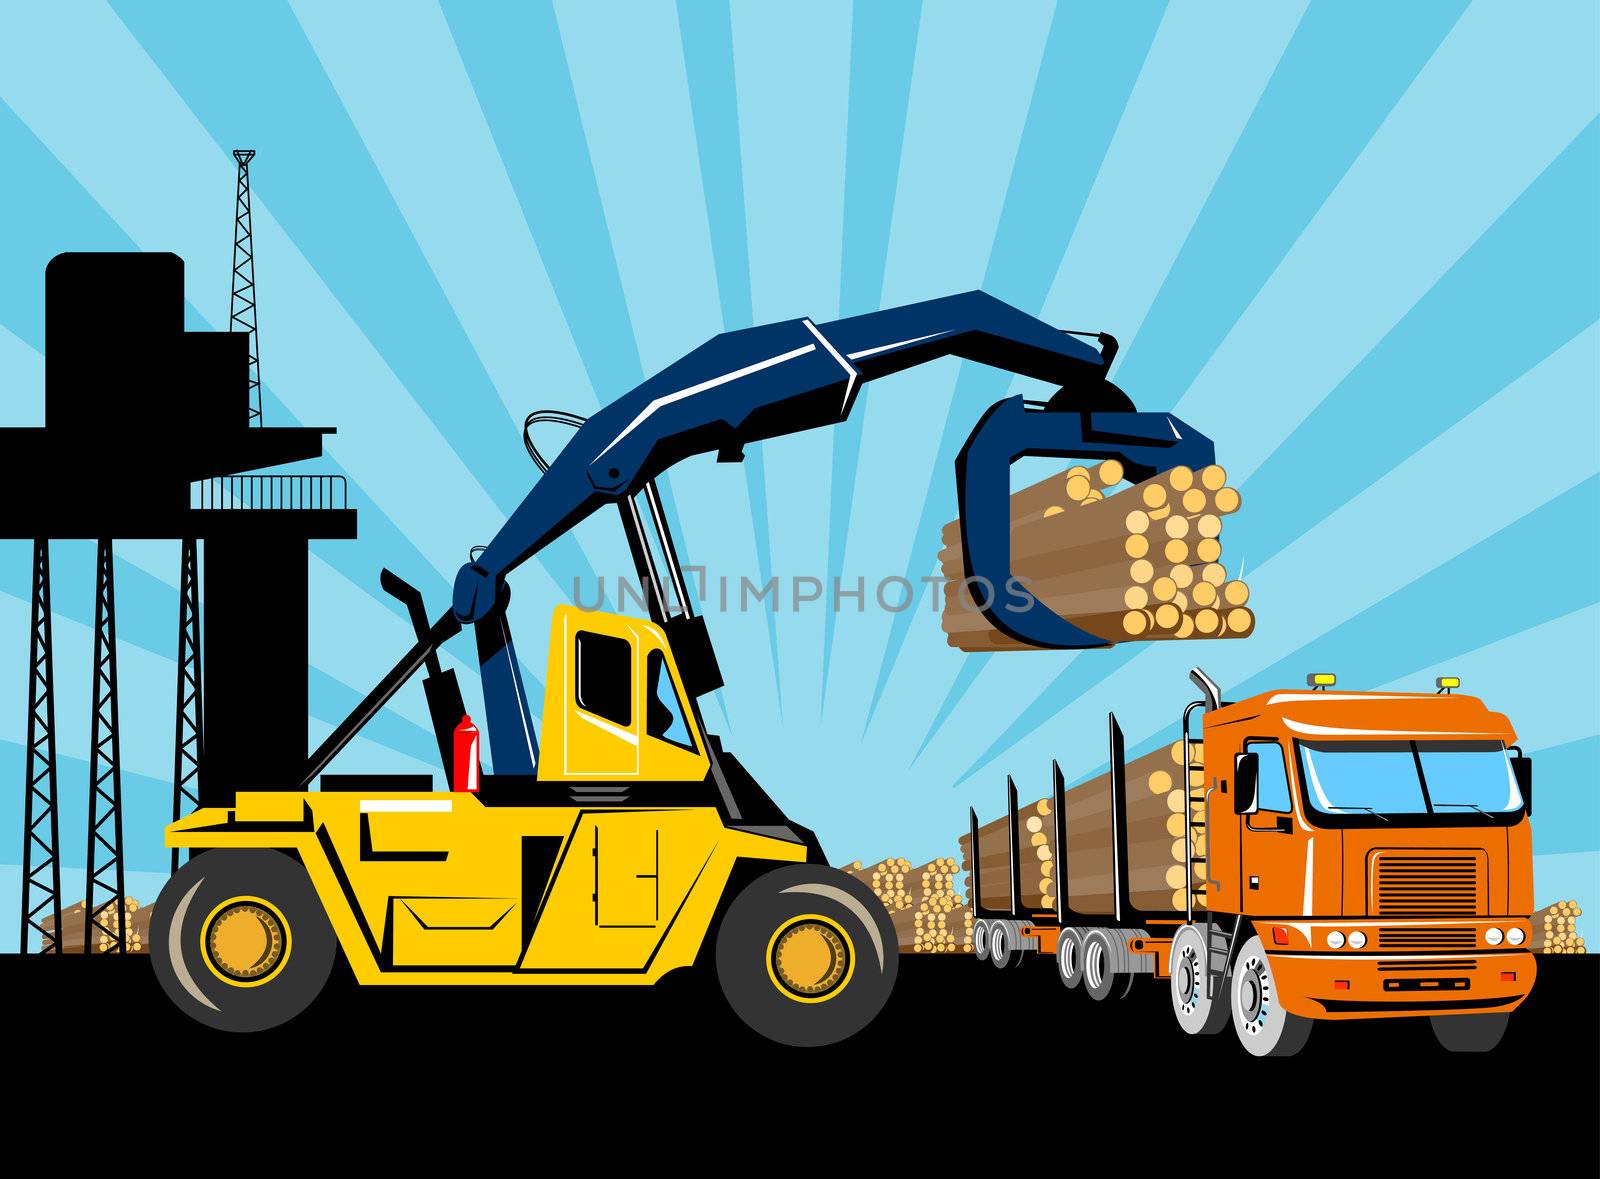 Forklift hoist crane load timber logging truck by patrimonio